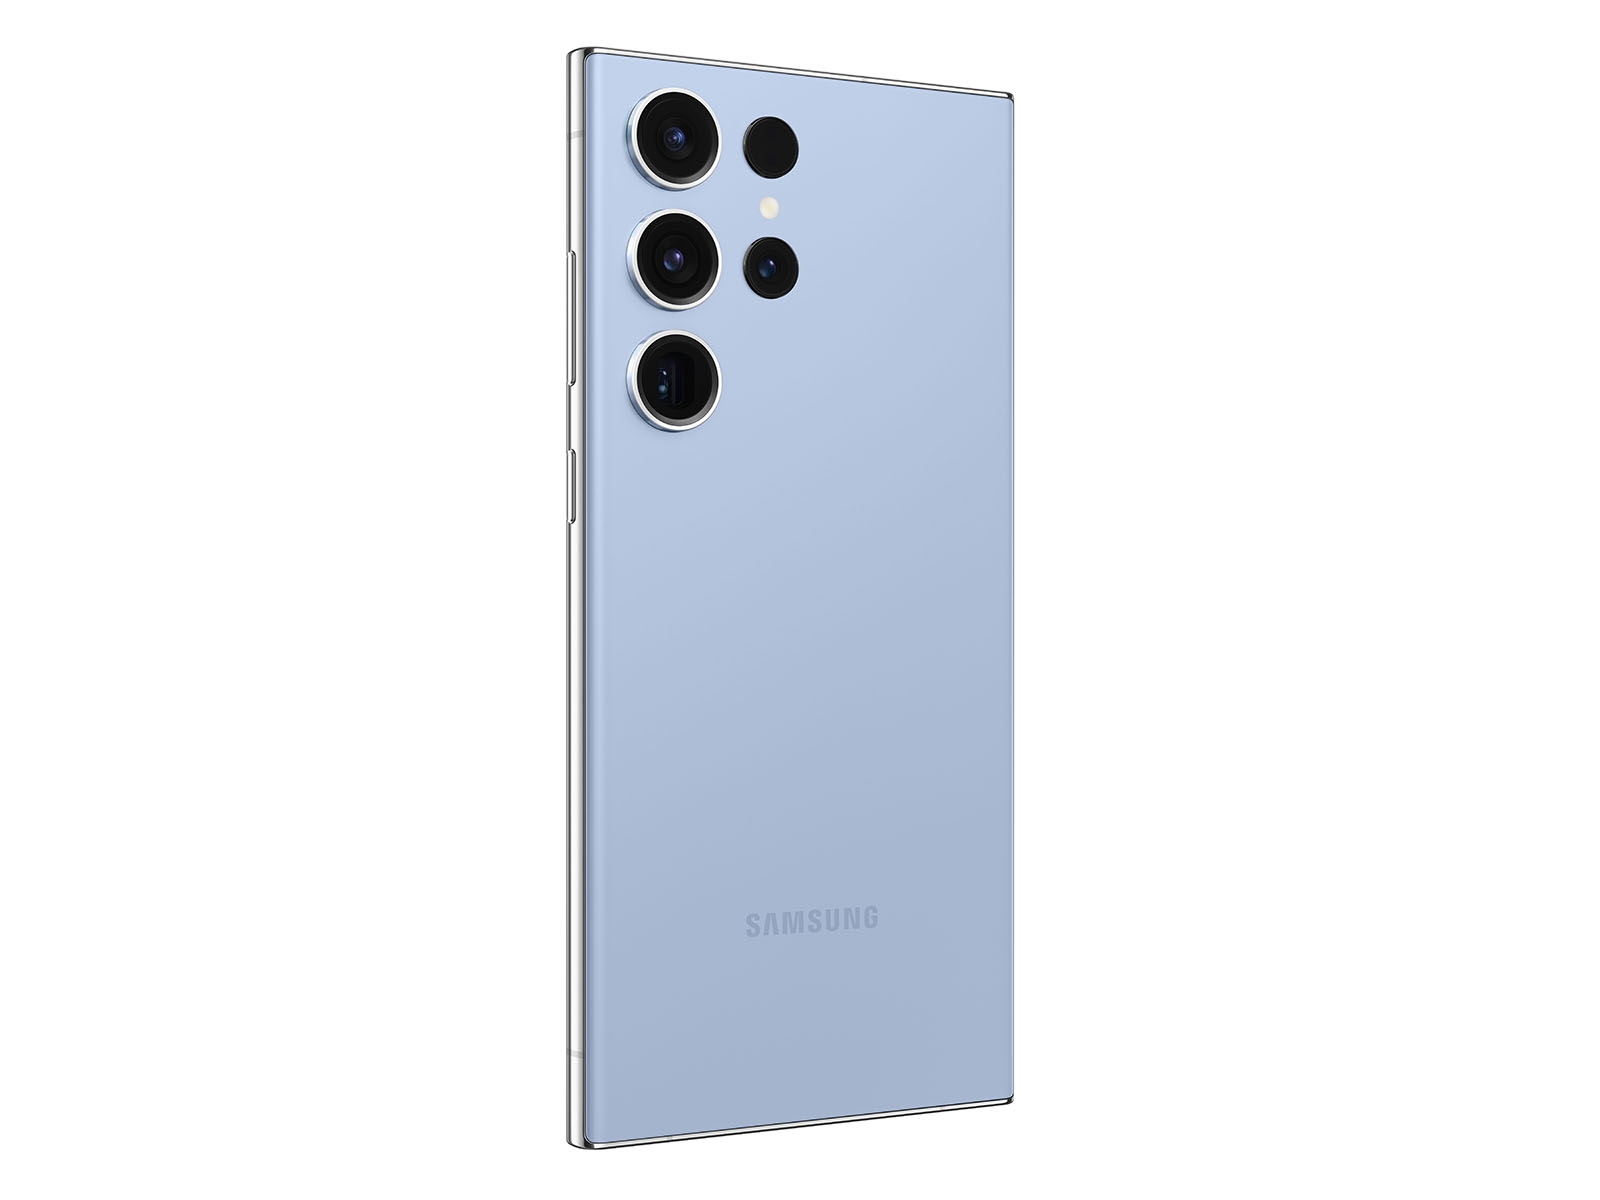 Samsung 623公升雙循環雙門冰箱RT62N704HS9/TW